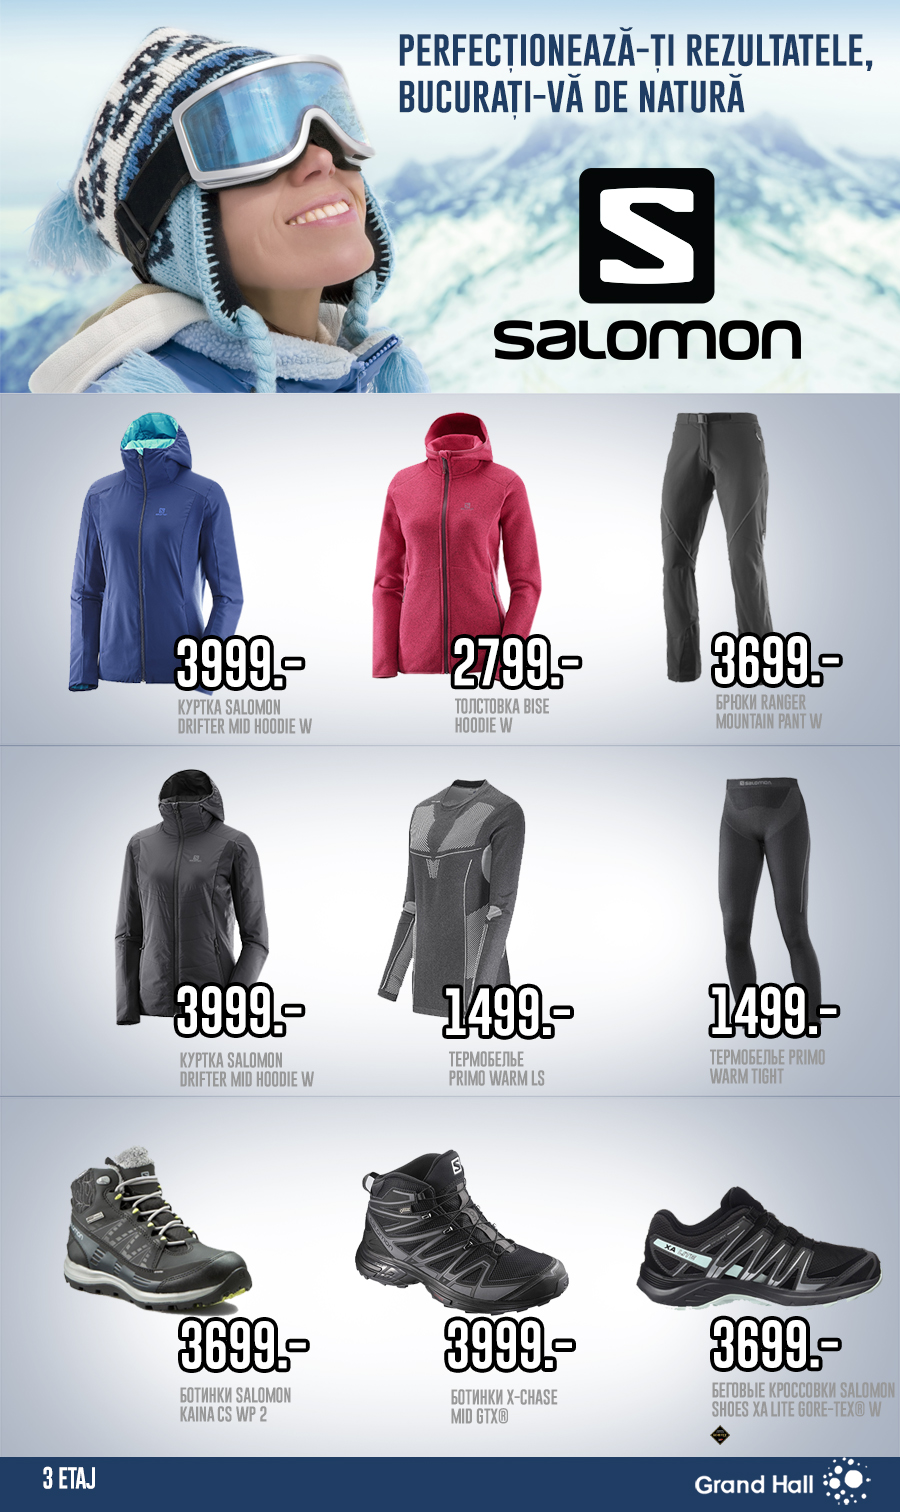 Salomon echipament de iarna